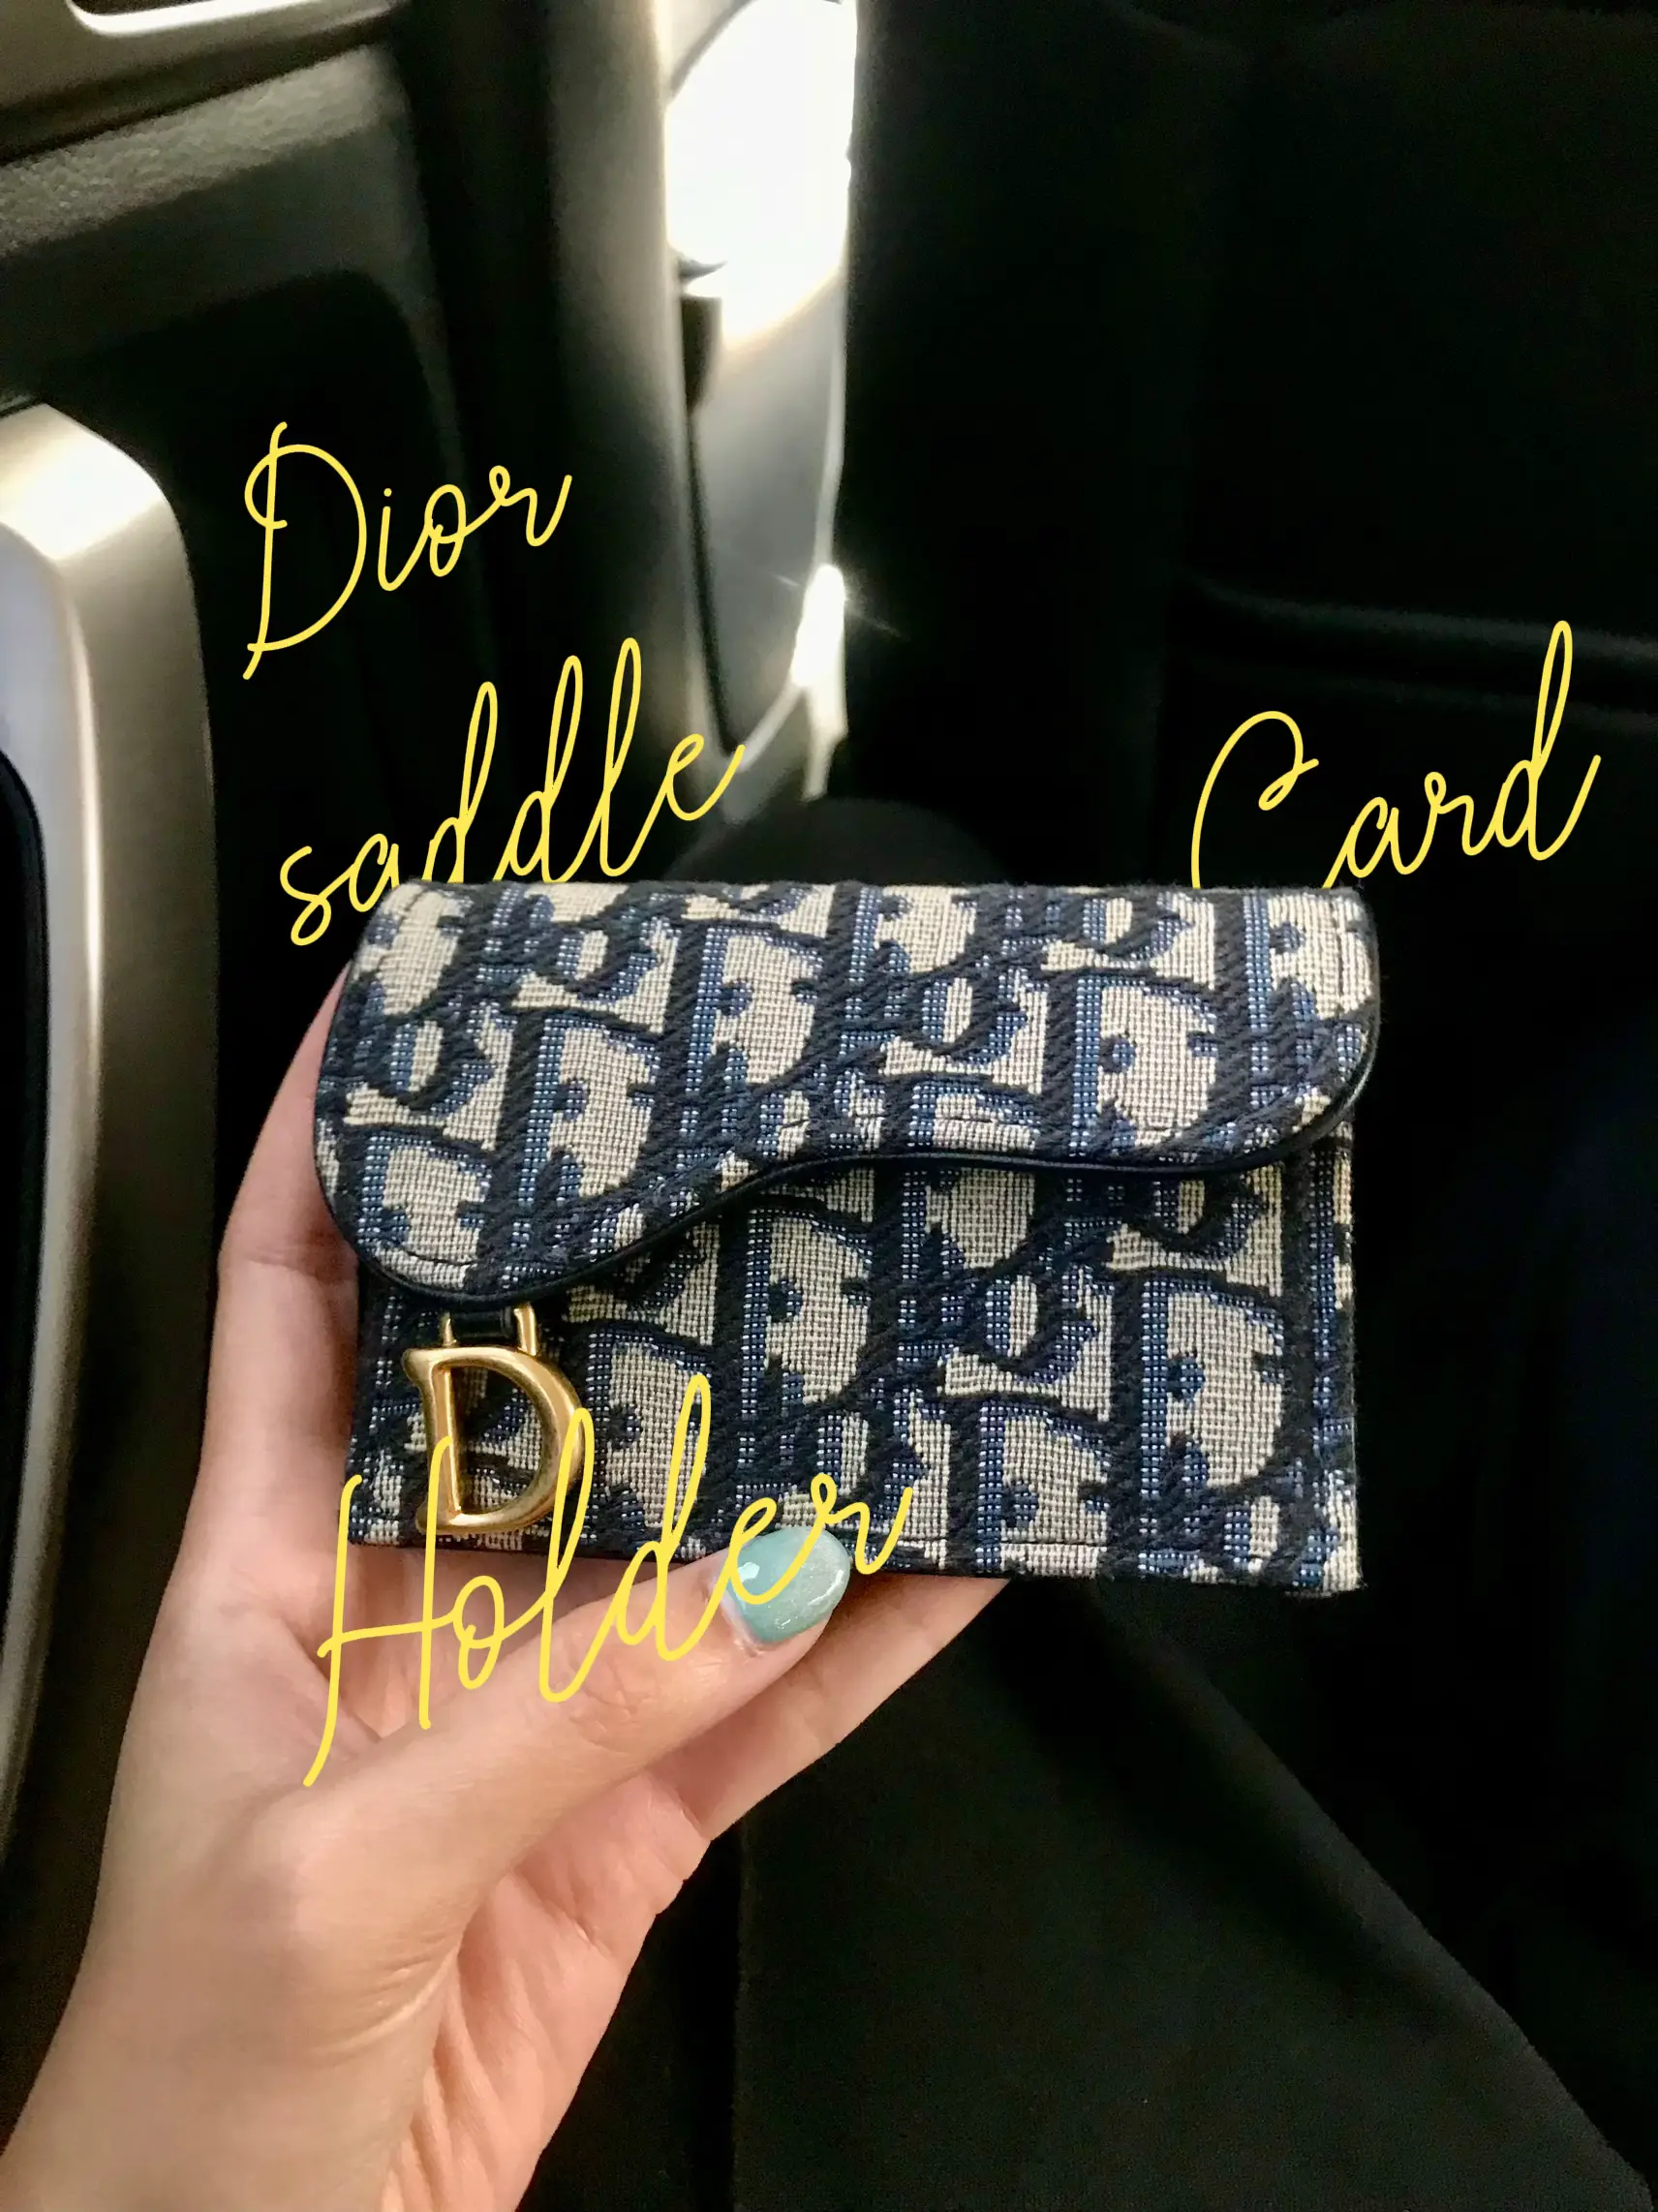 DIOR lady dior 5 gusset cardholder, unboxing + comparison